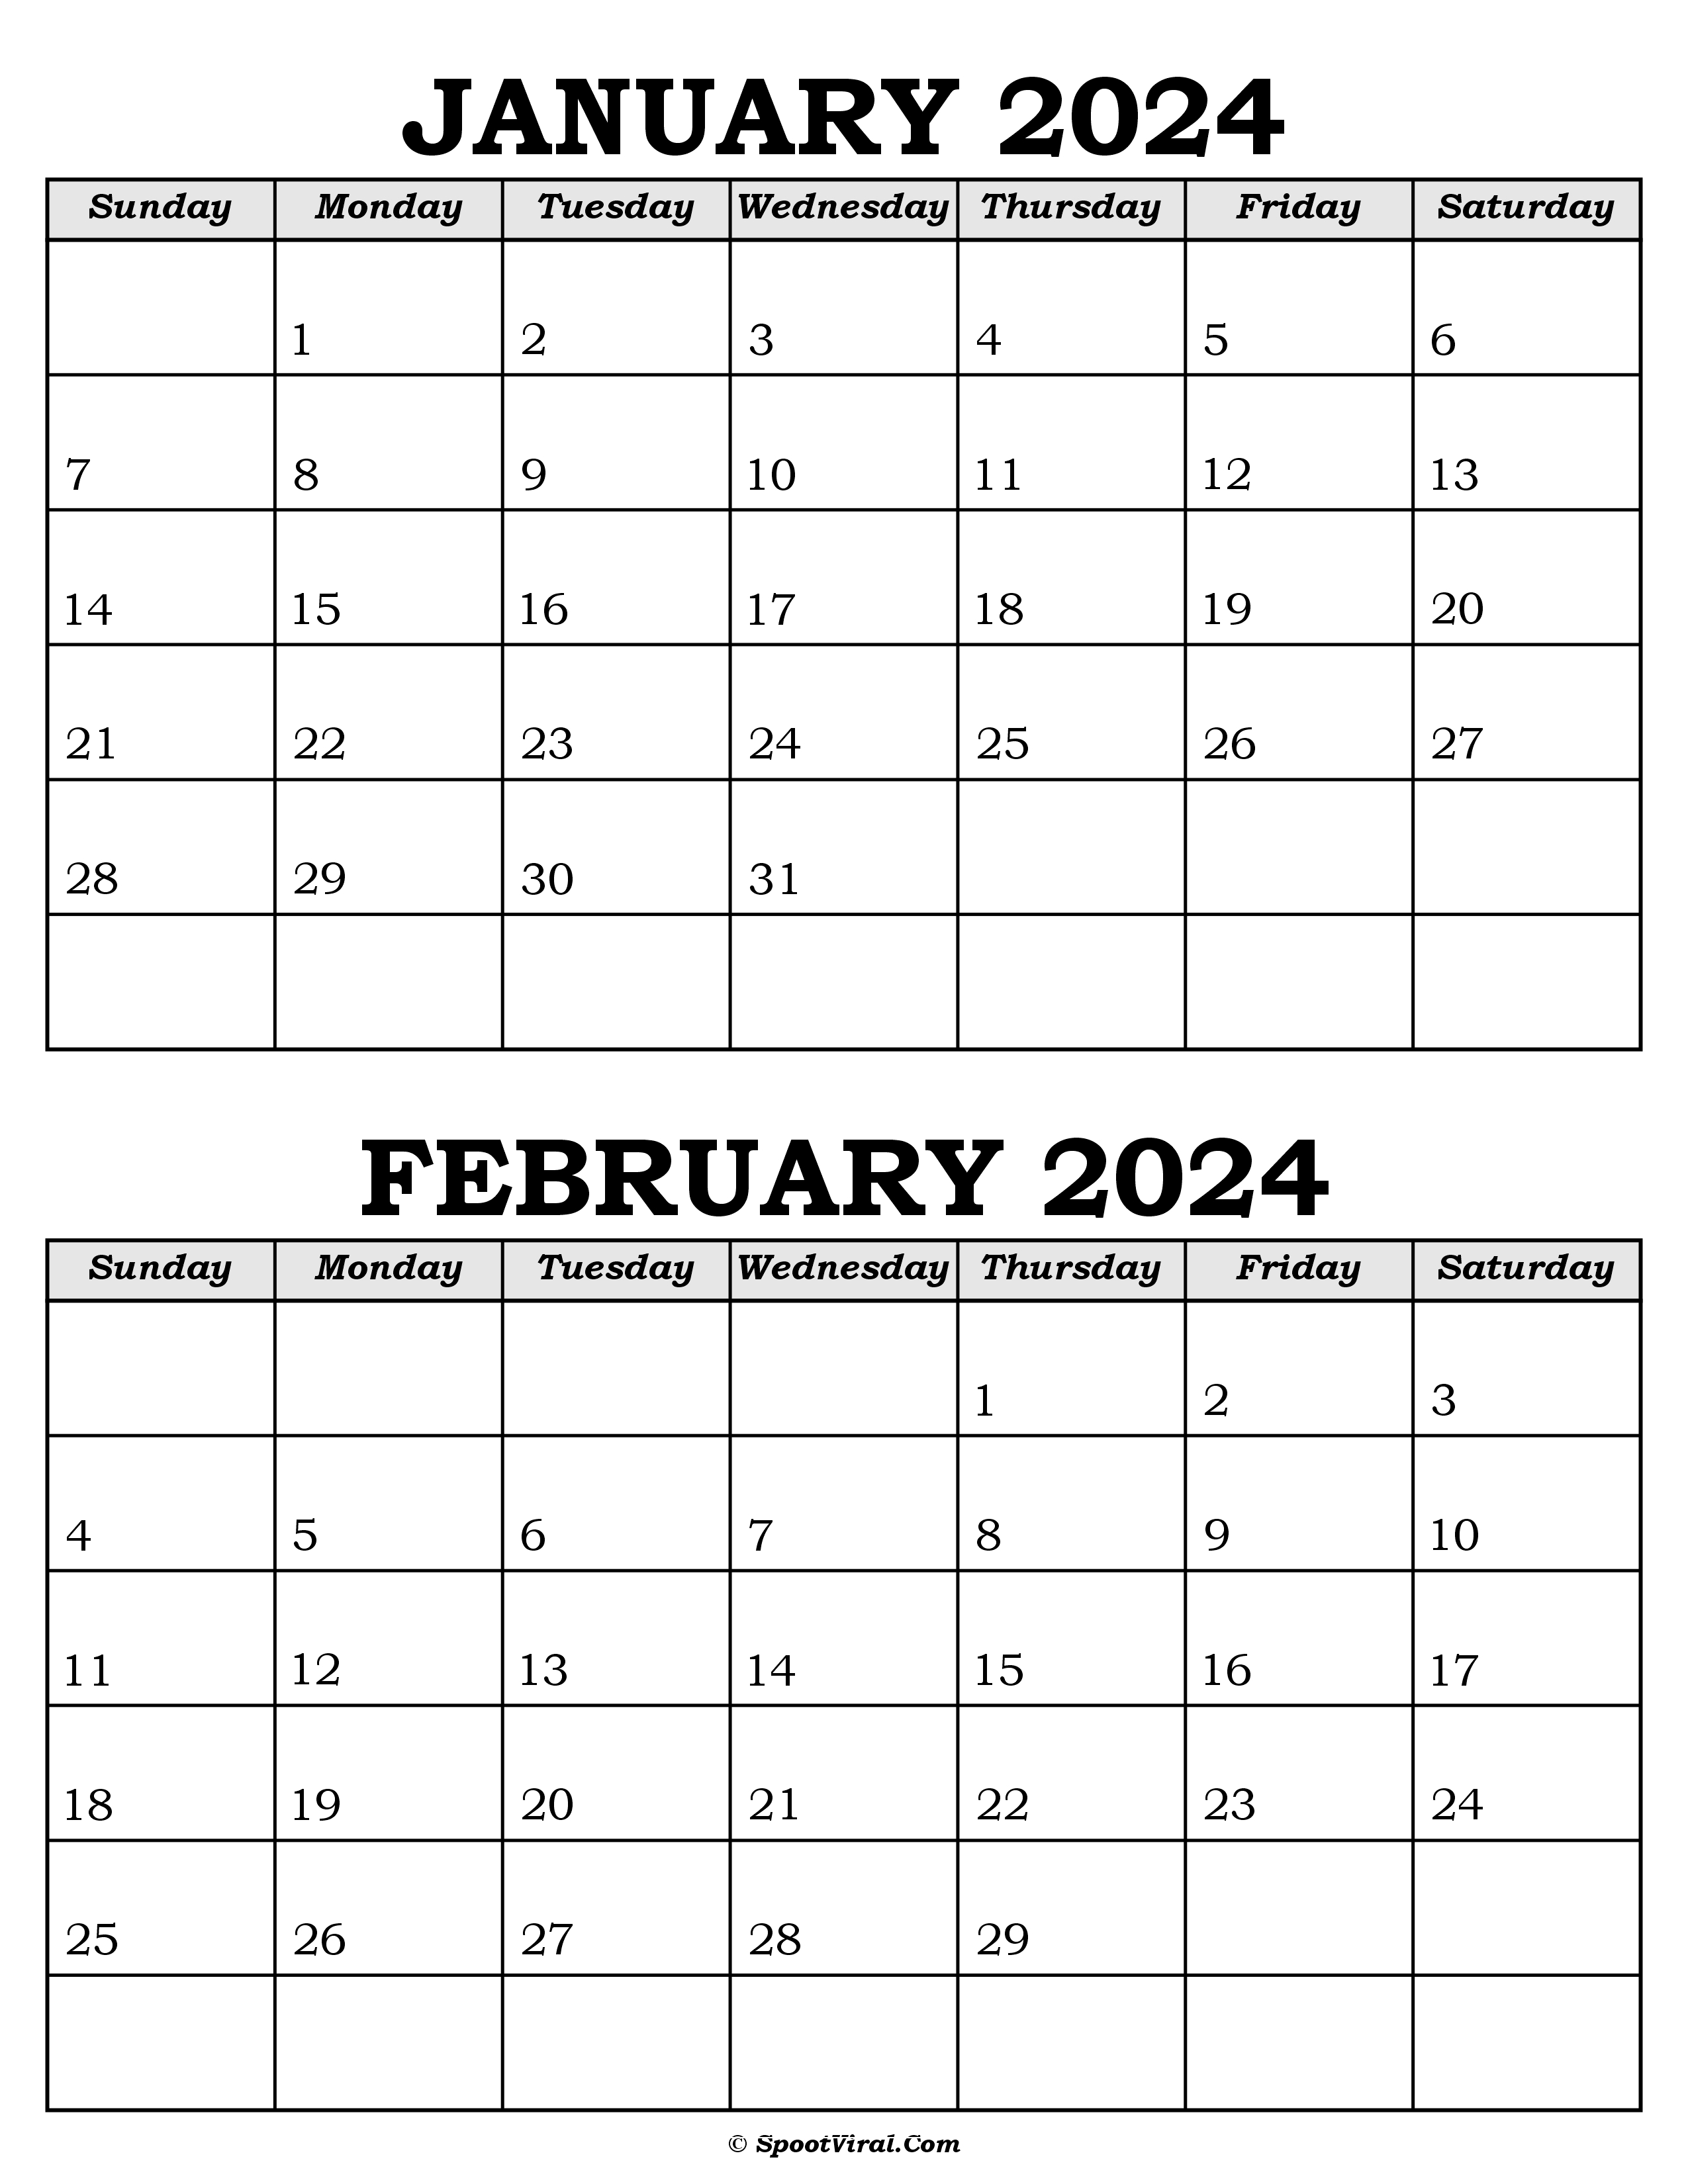 January and February Calendar 2024